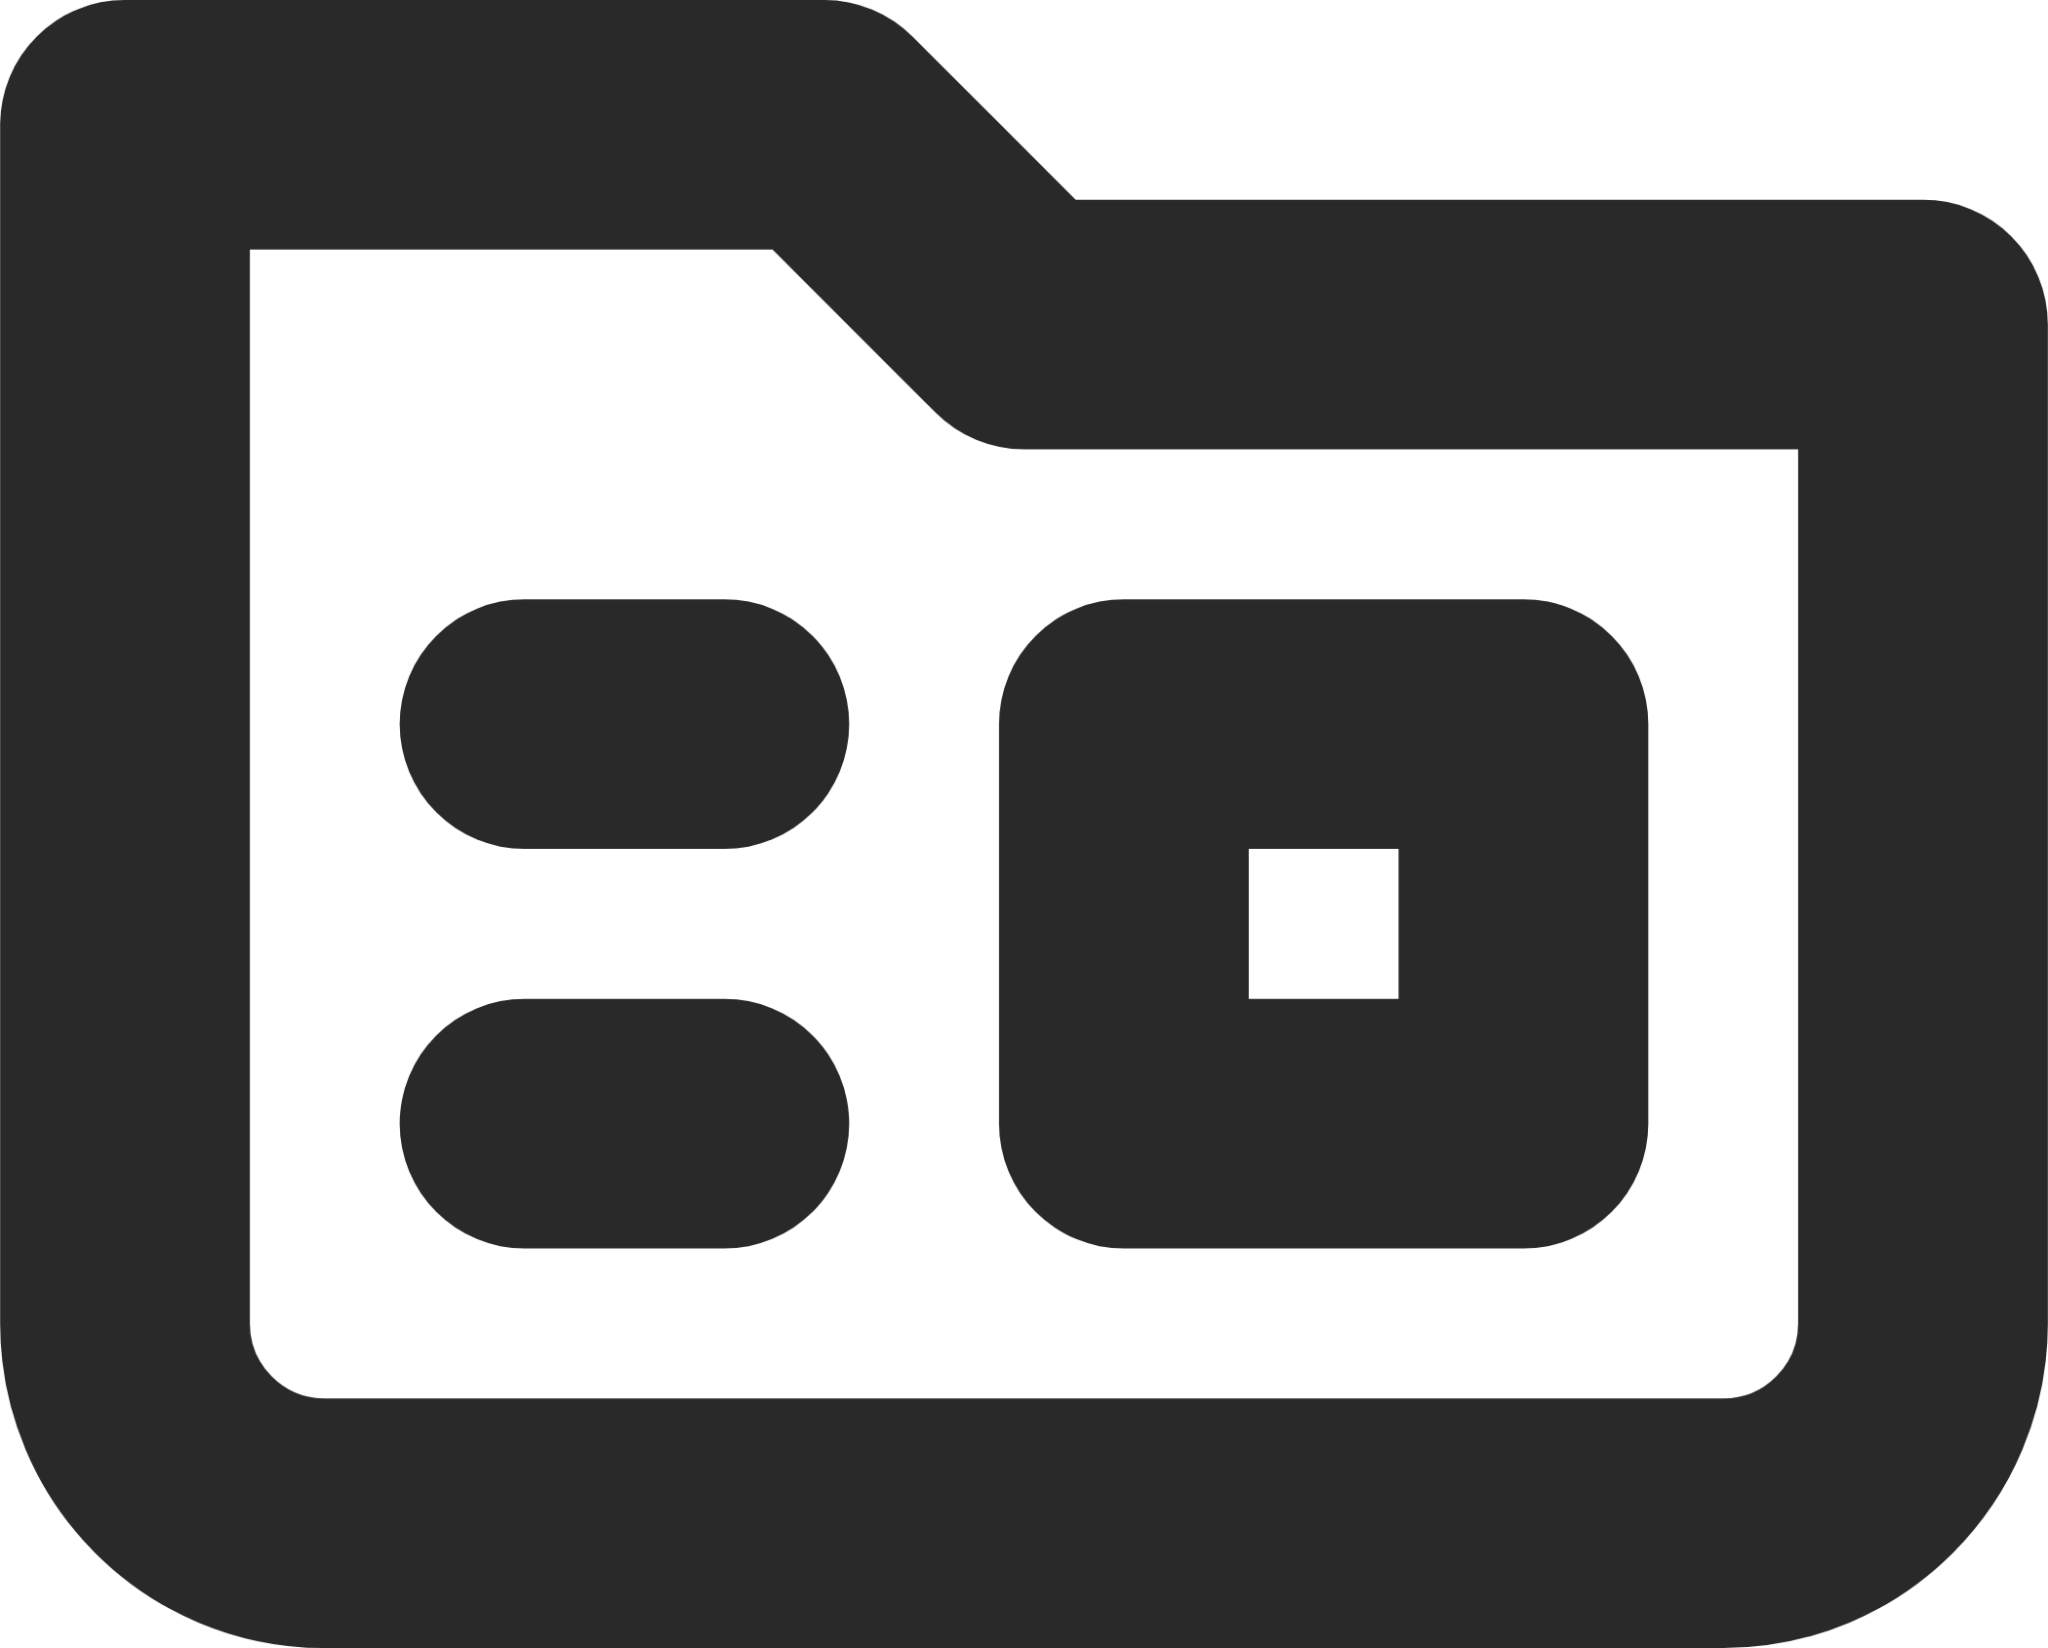 folder document icon